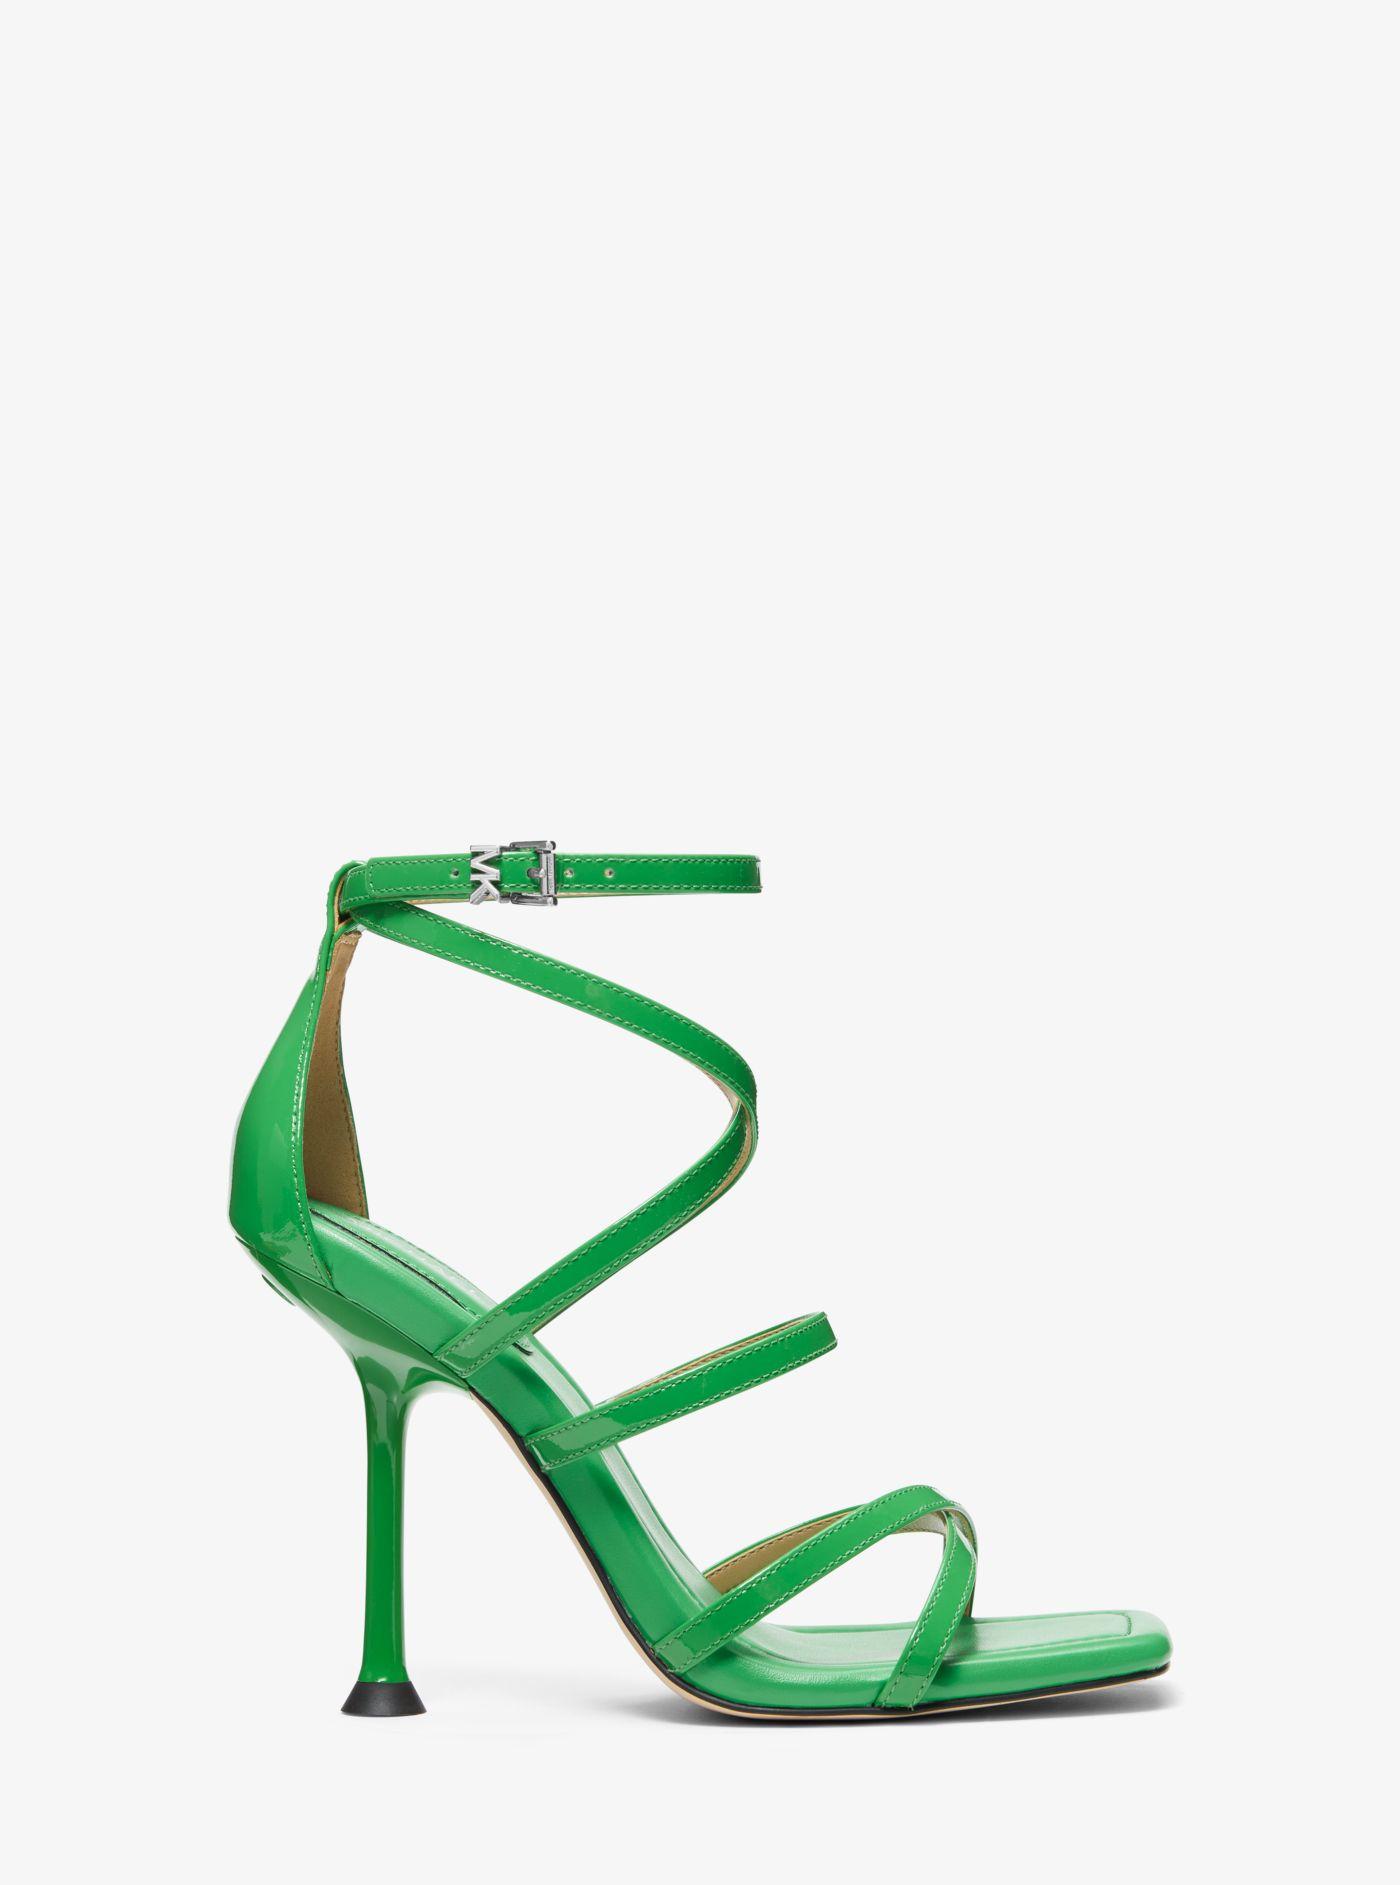 MICHAEL Michael Kors Imani Patent Leather Sandal in Green | Lyst